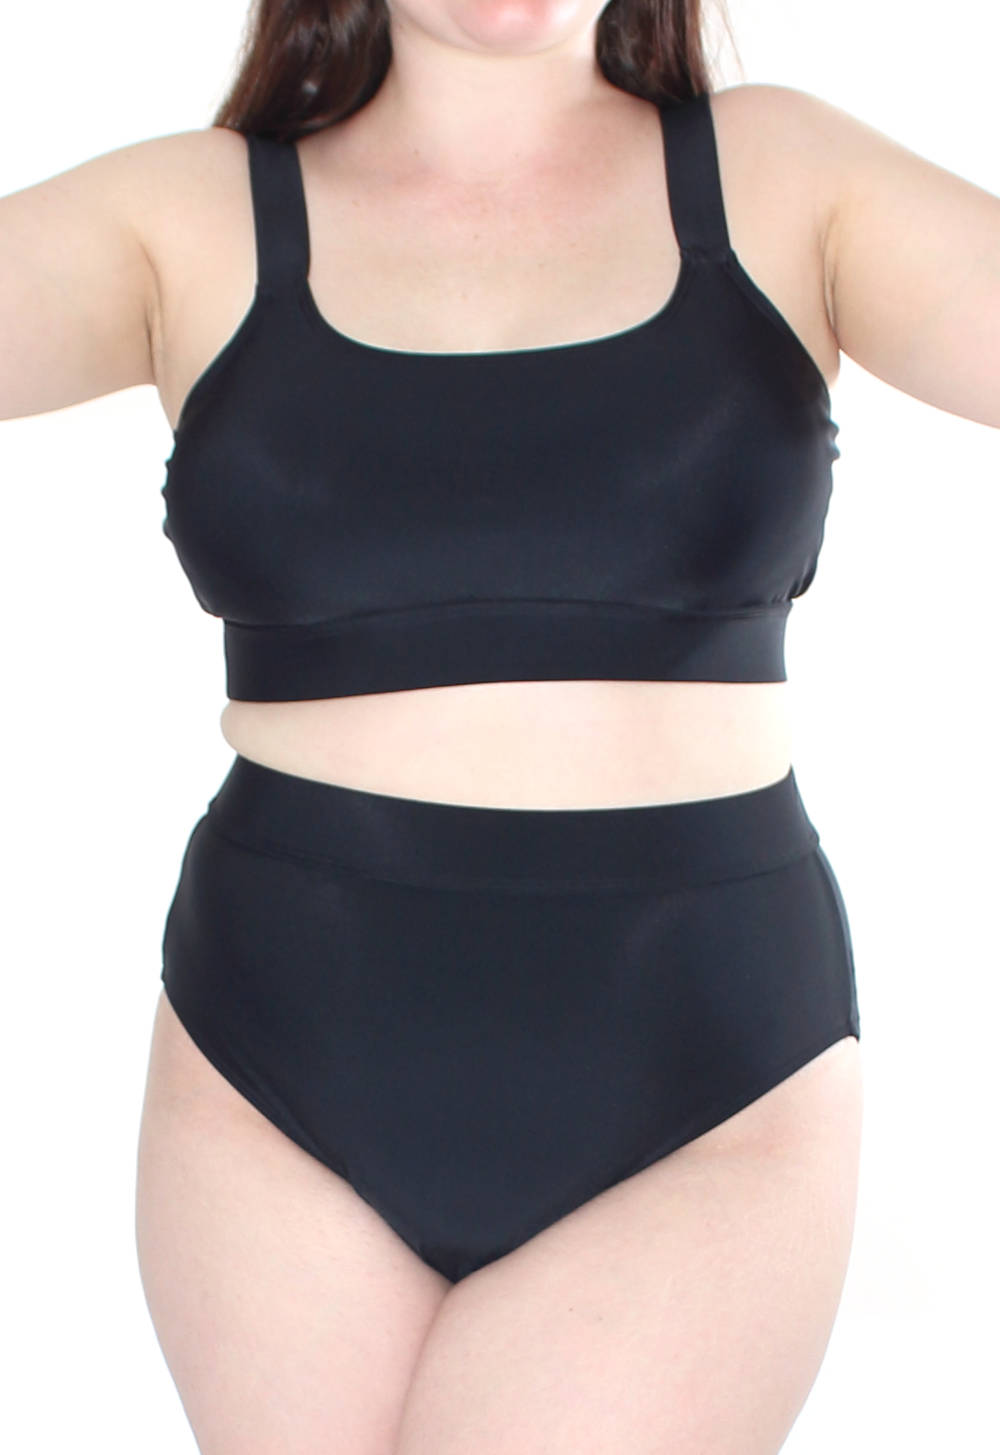 https://oceanroadswimwear.com.au/wp-content/uploads/2019/01/plus-size-sport-bikini-set.jpg